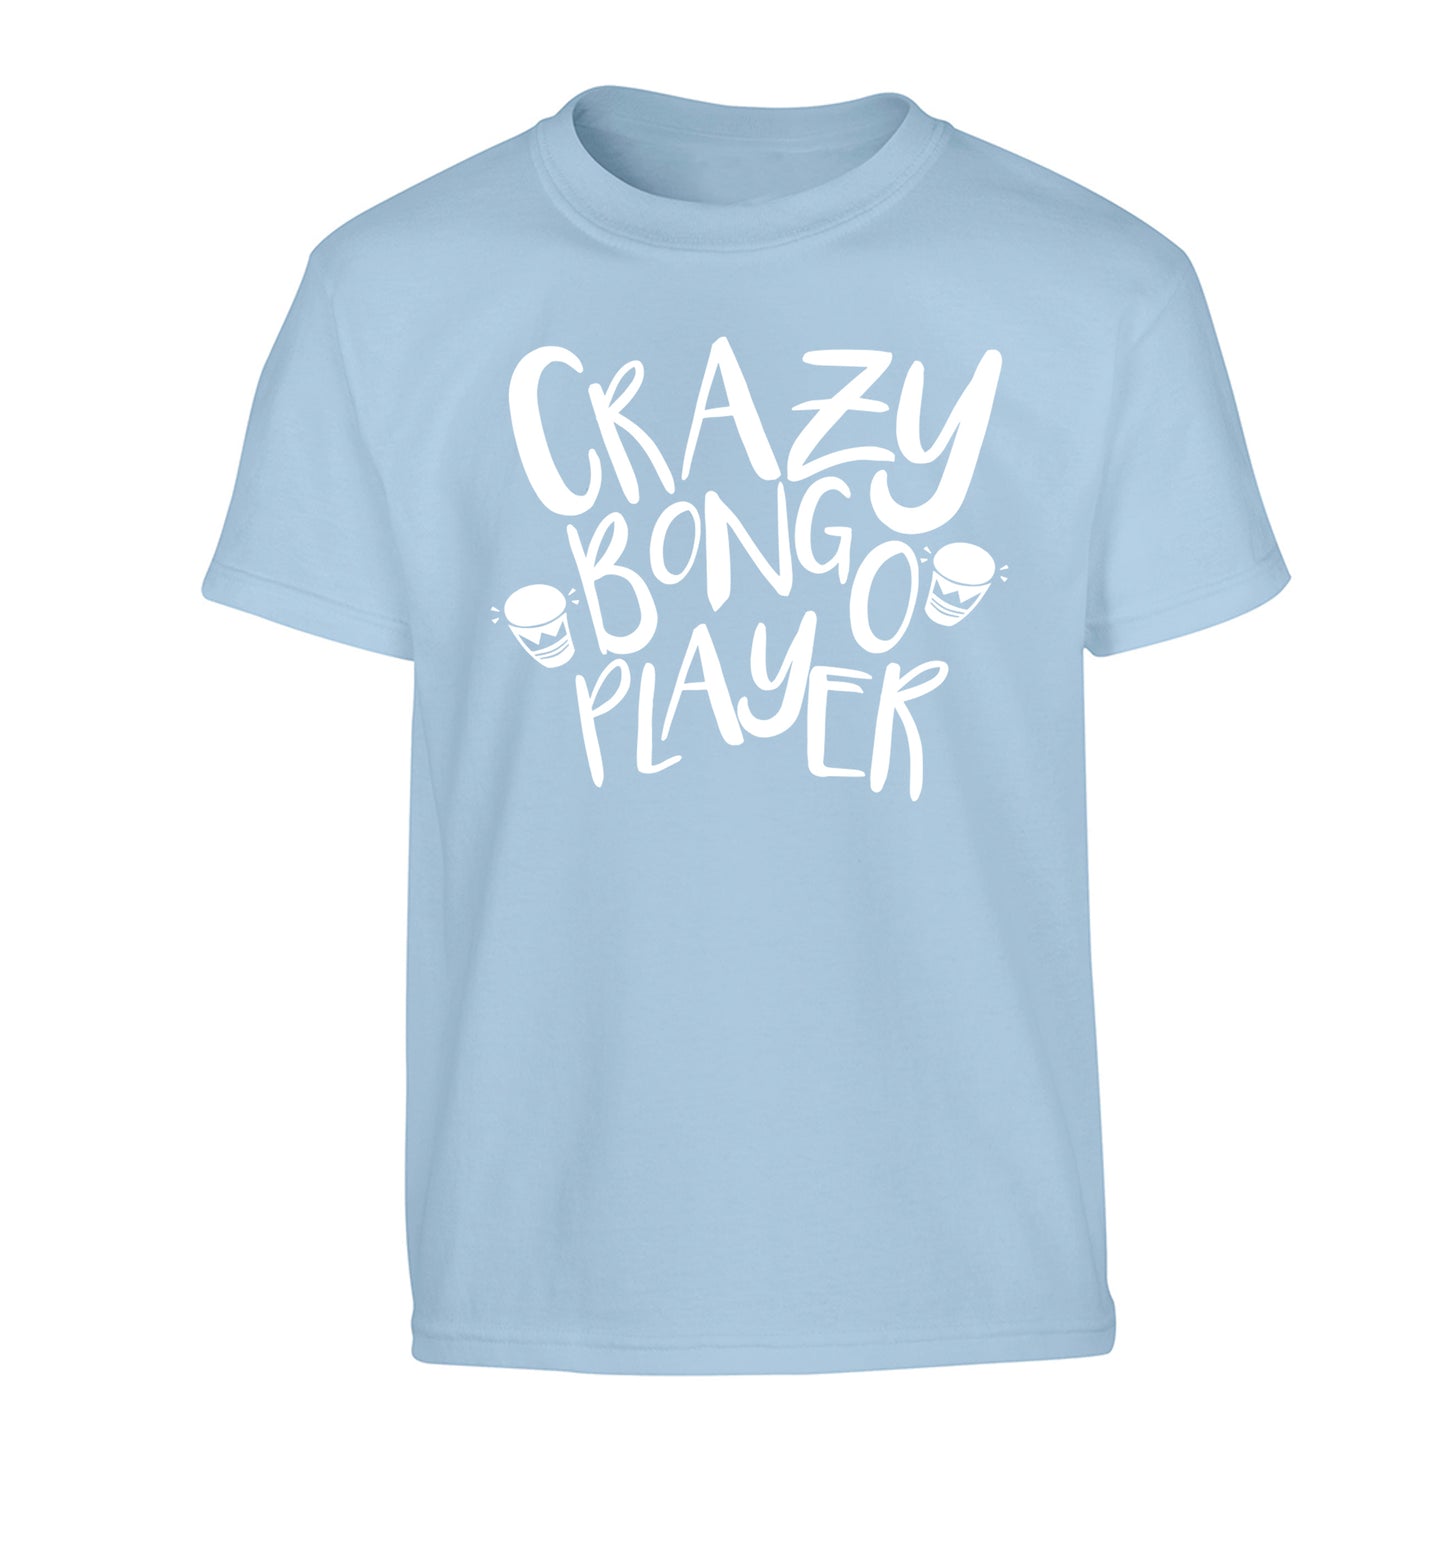 Crazy bongo player Children's light blue Tshirt 12-14 Years